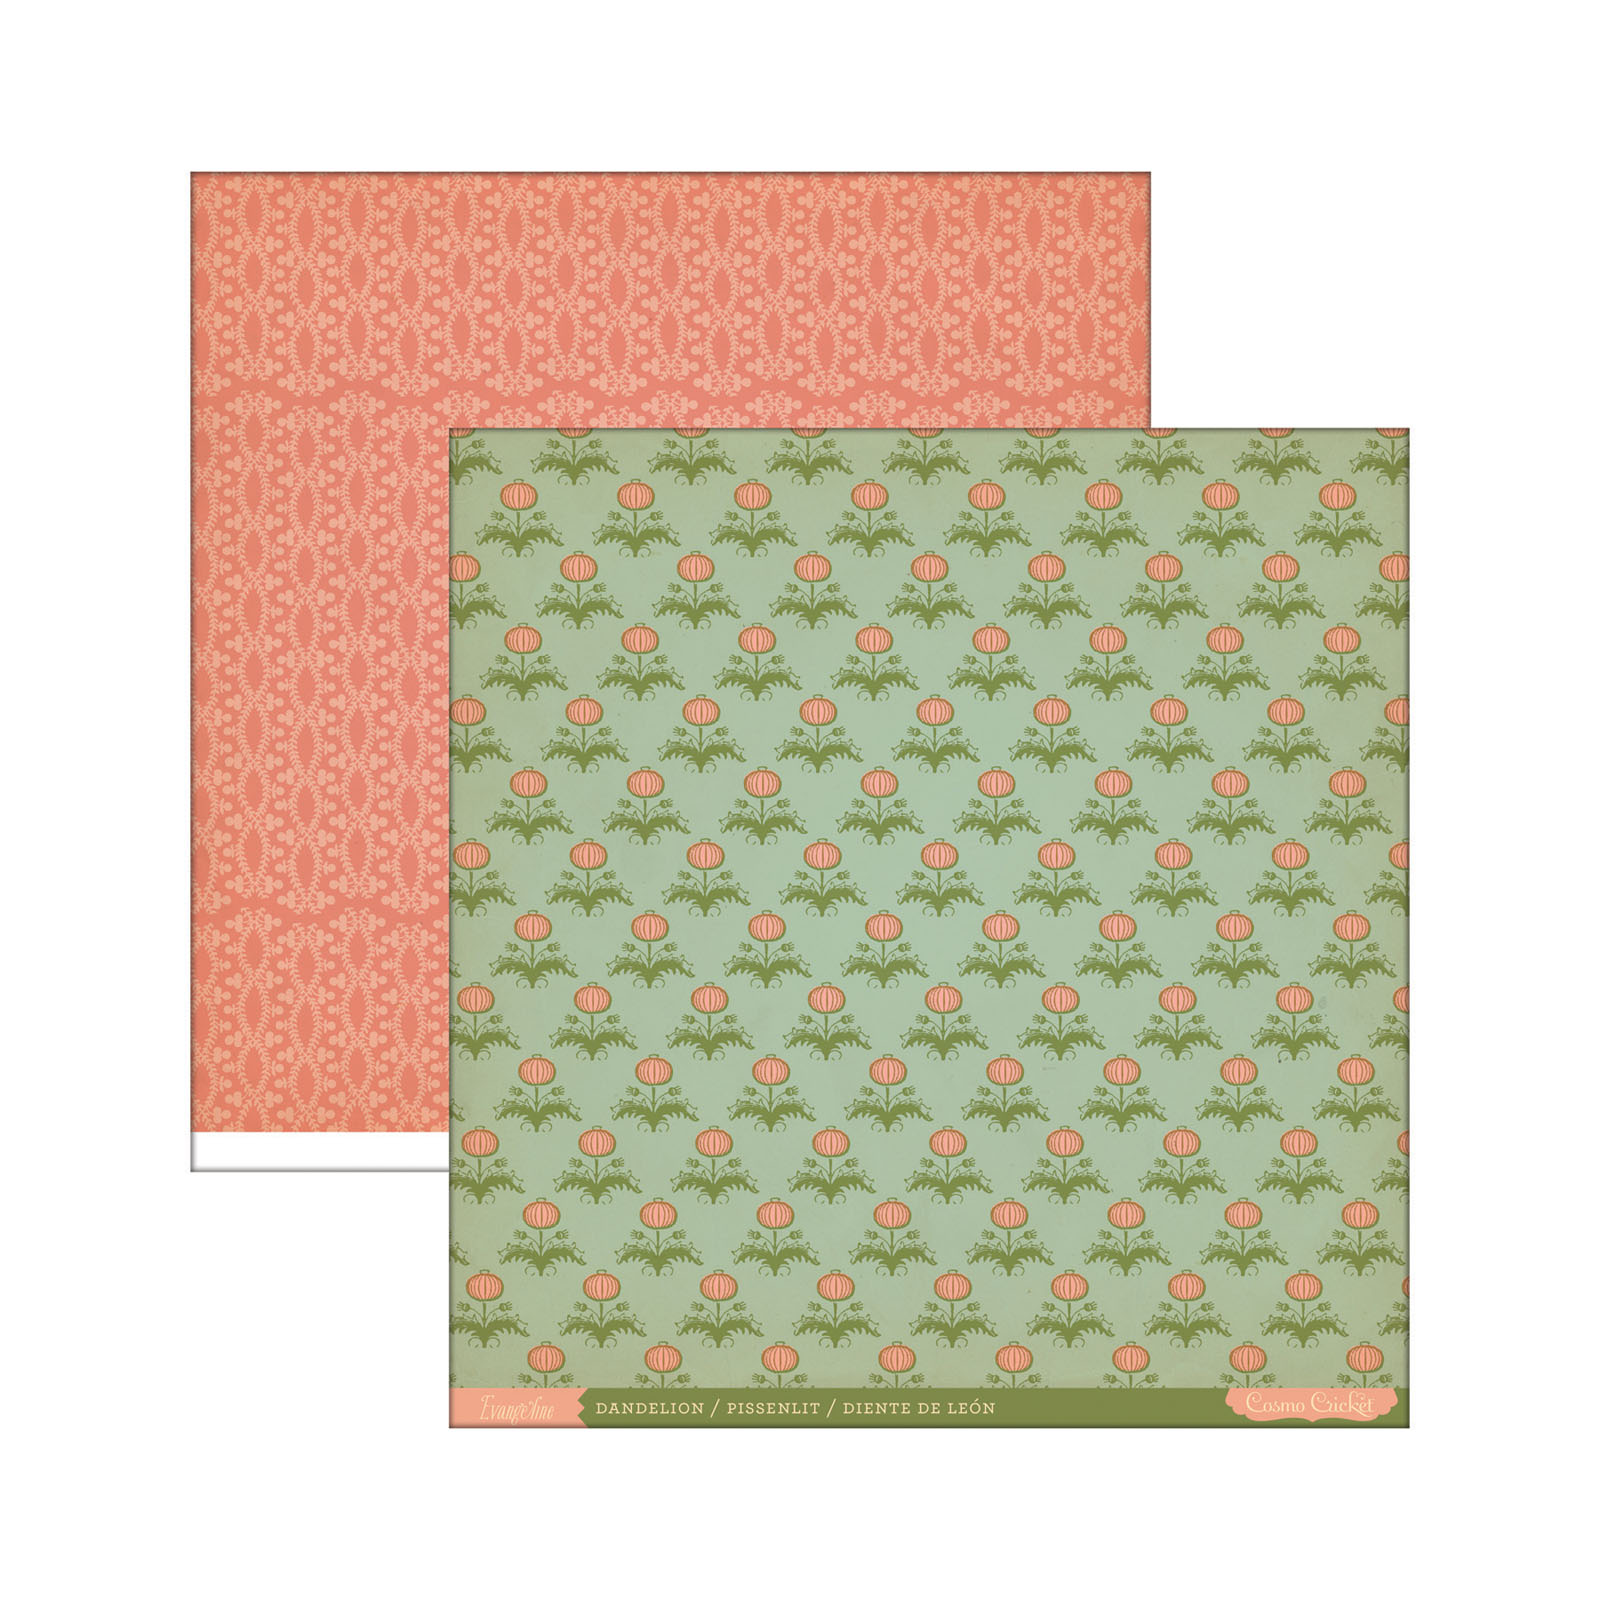 Cosmo cricket • Evangeline paper 30,5x30,5cm 1pcs Dandelion